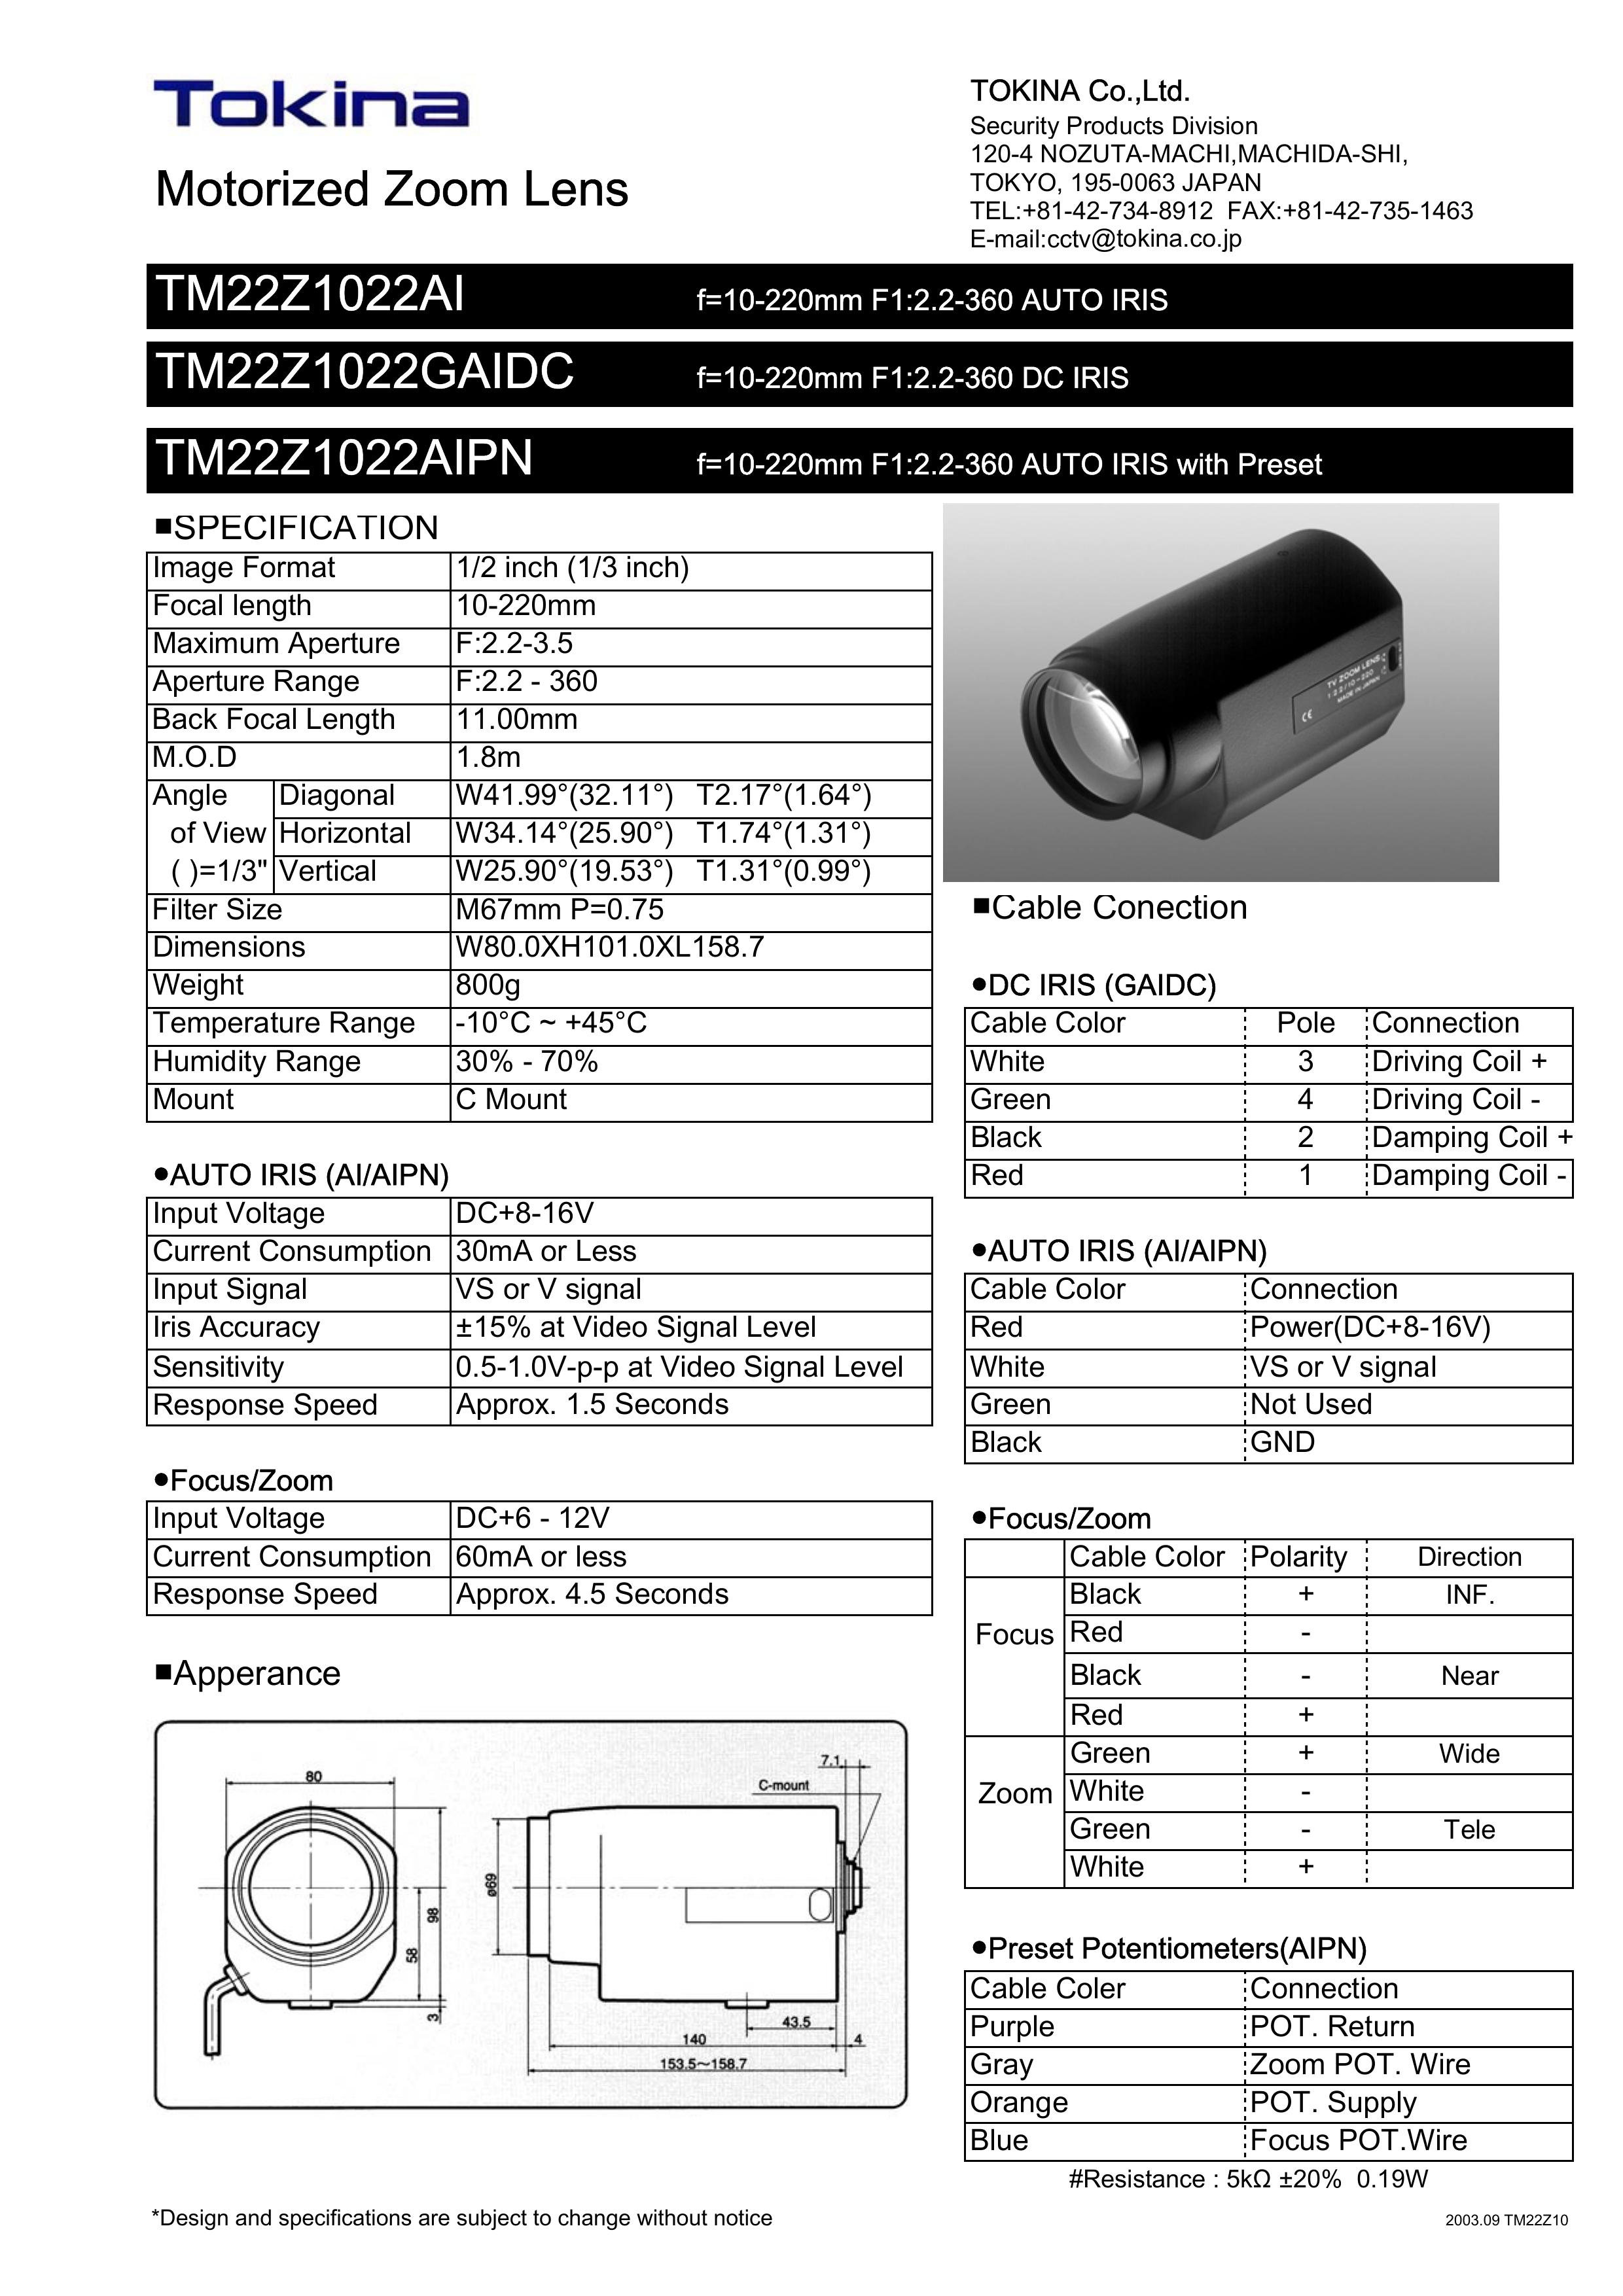 Tokina TM22Z1022GAIDC Camera Lens User Manual